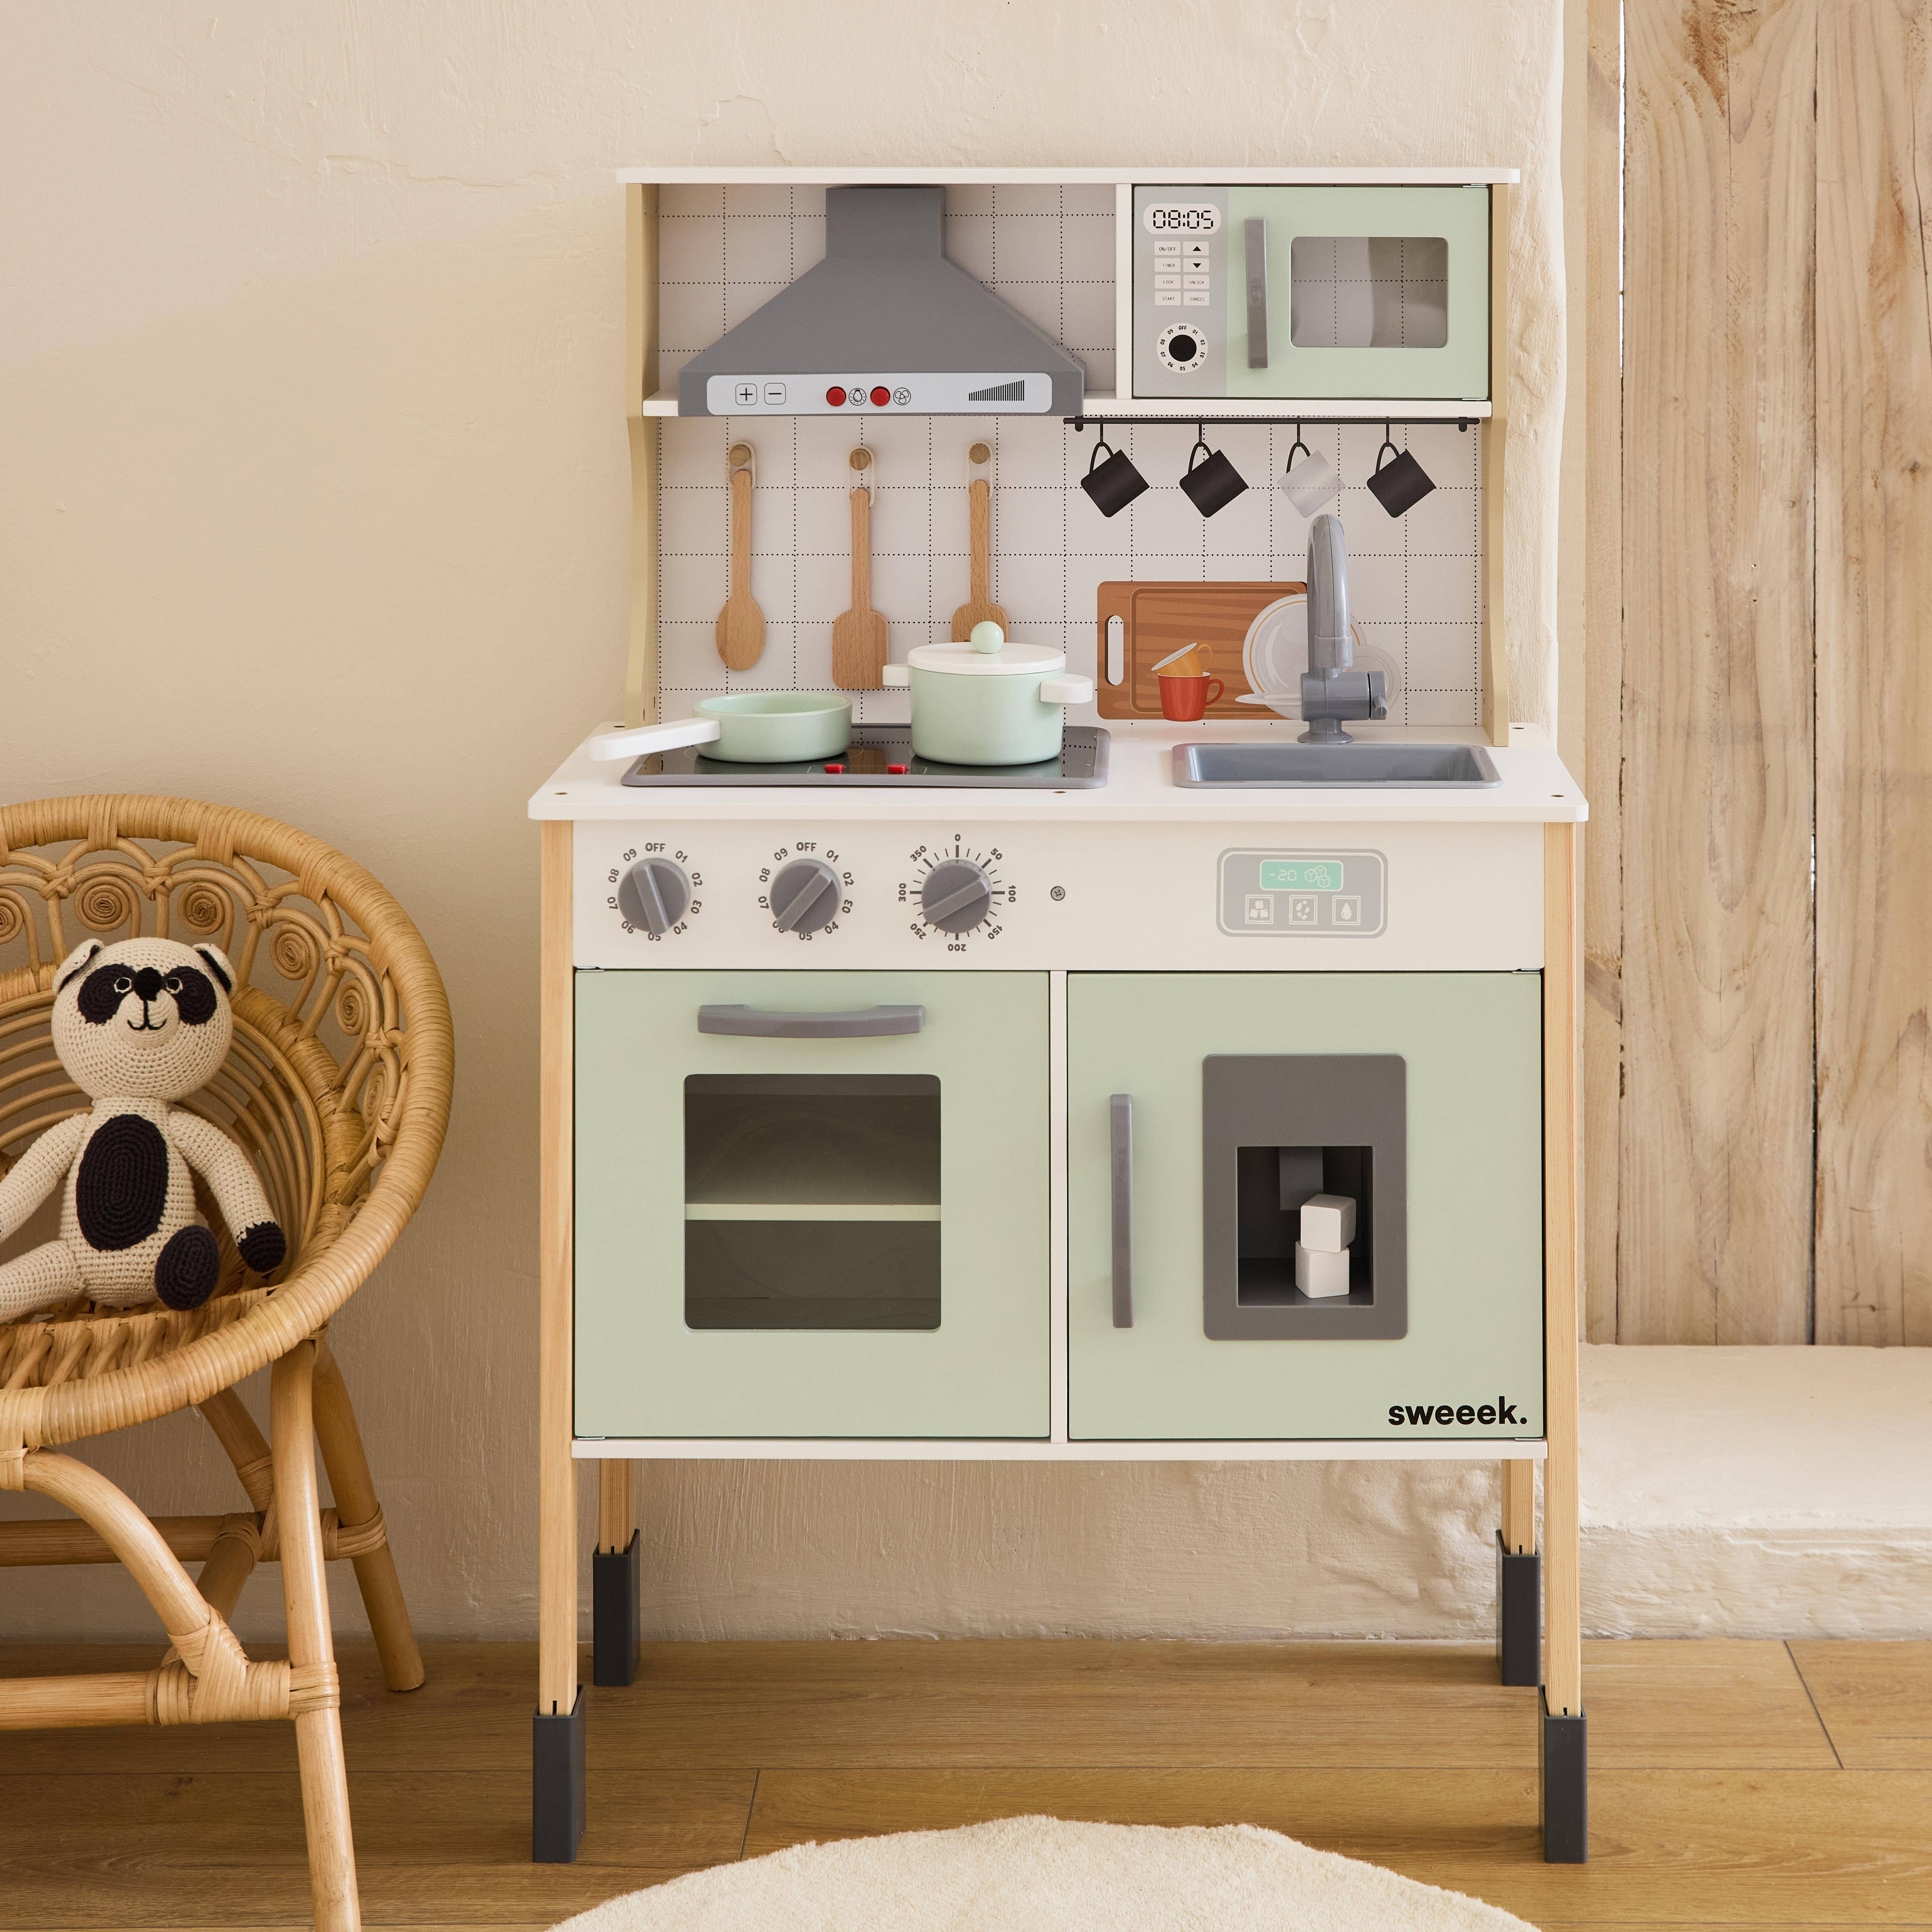 Panel de cocina infantil, accesorios incluidos, campana, placa de cocción, microondas electrónico,sweeek,Photo1